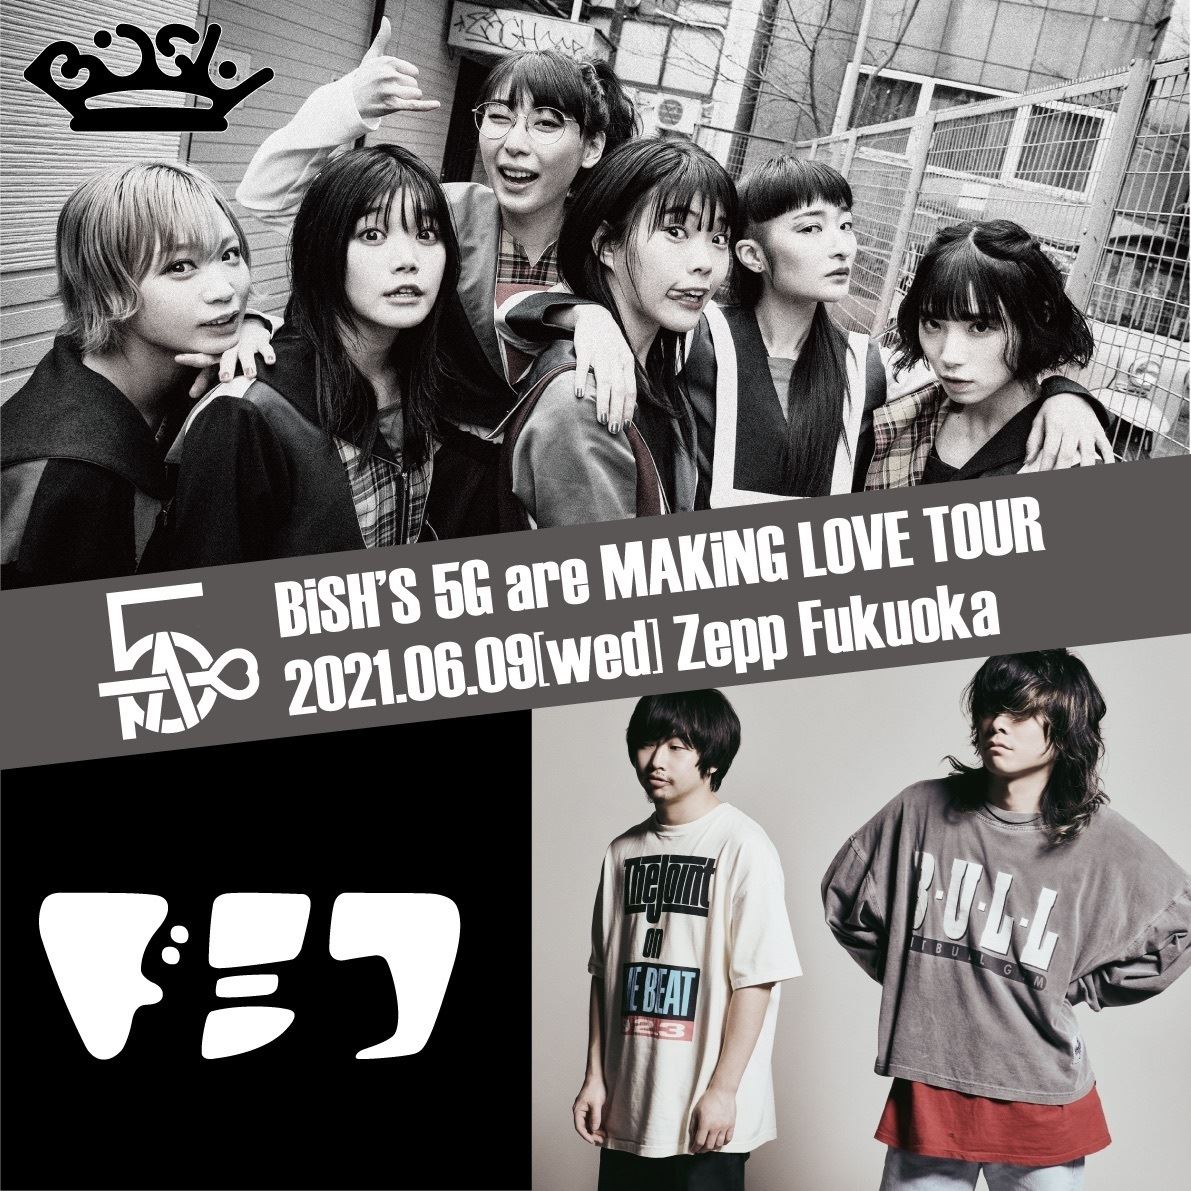 『BiSH’S 5G are MAKiNG LOVE TOUR』6月9日公演 告知画像